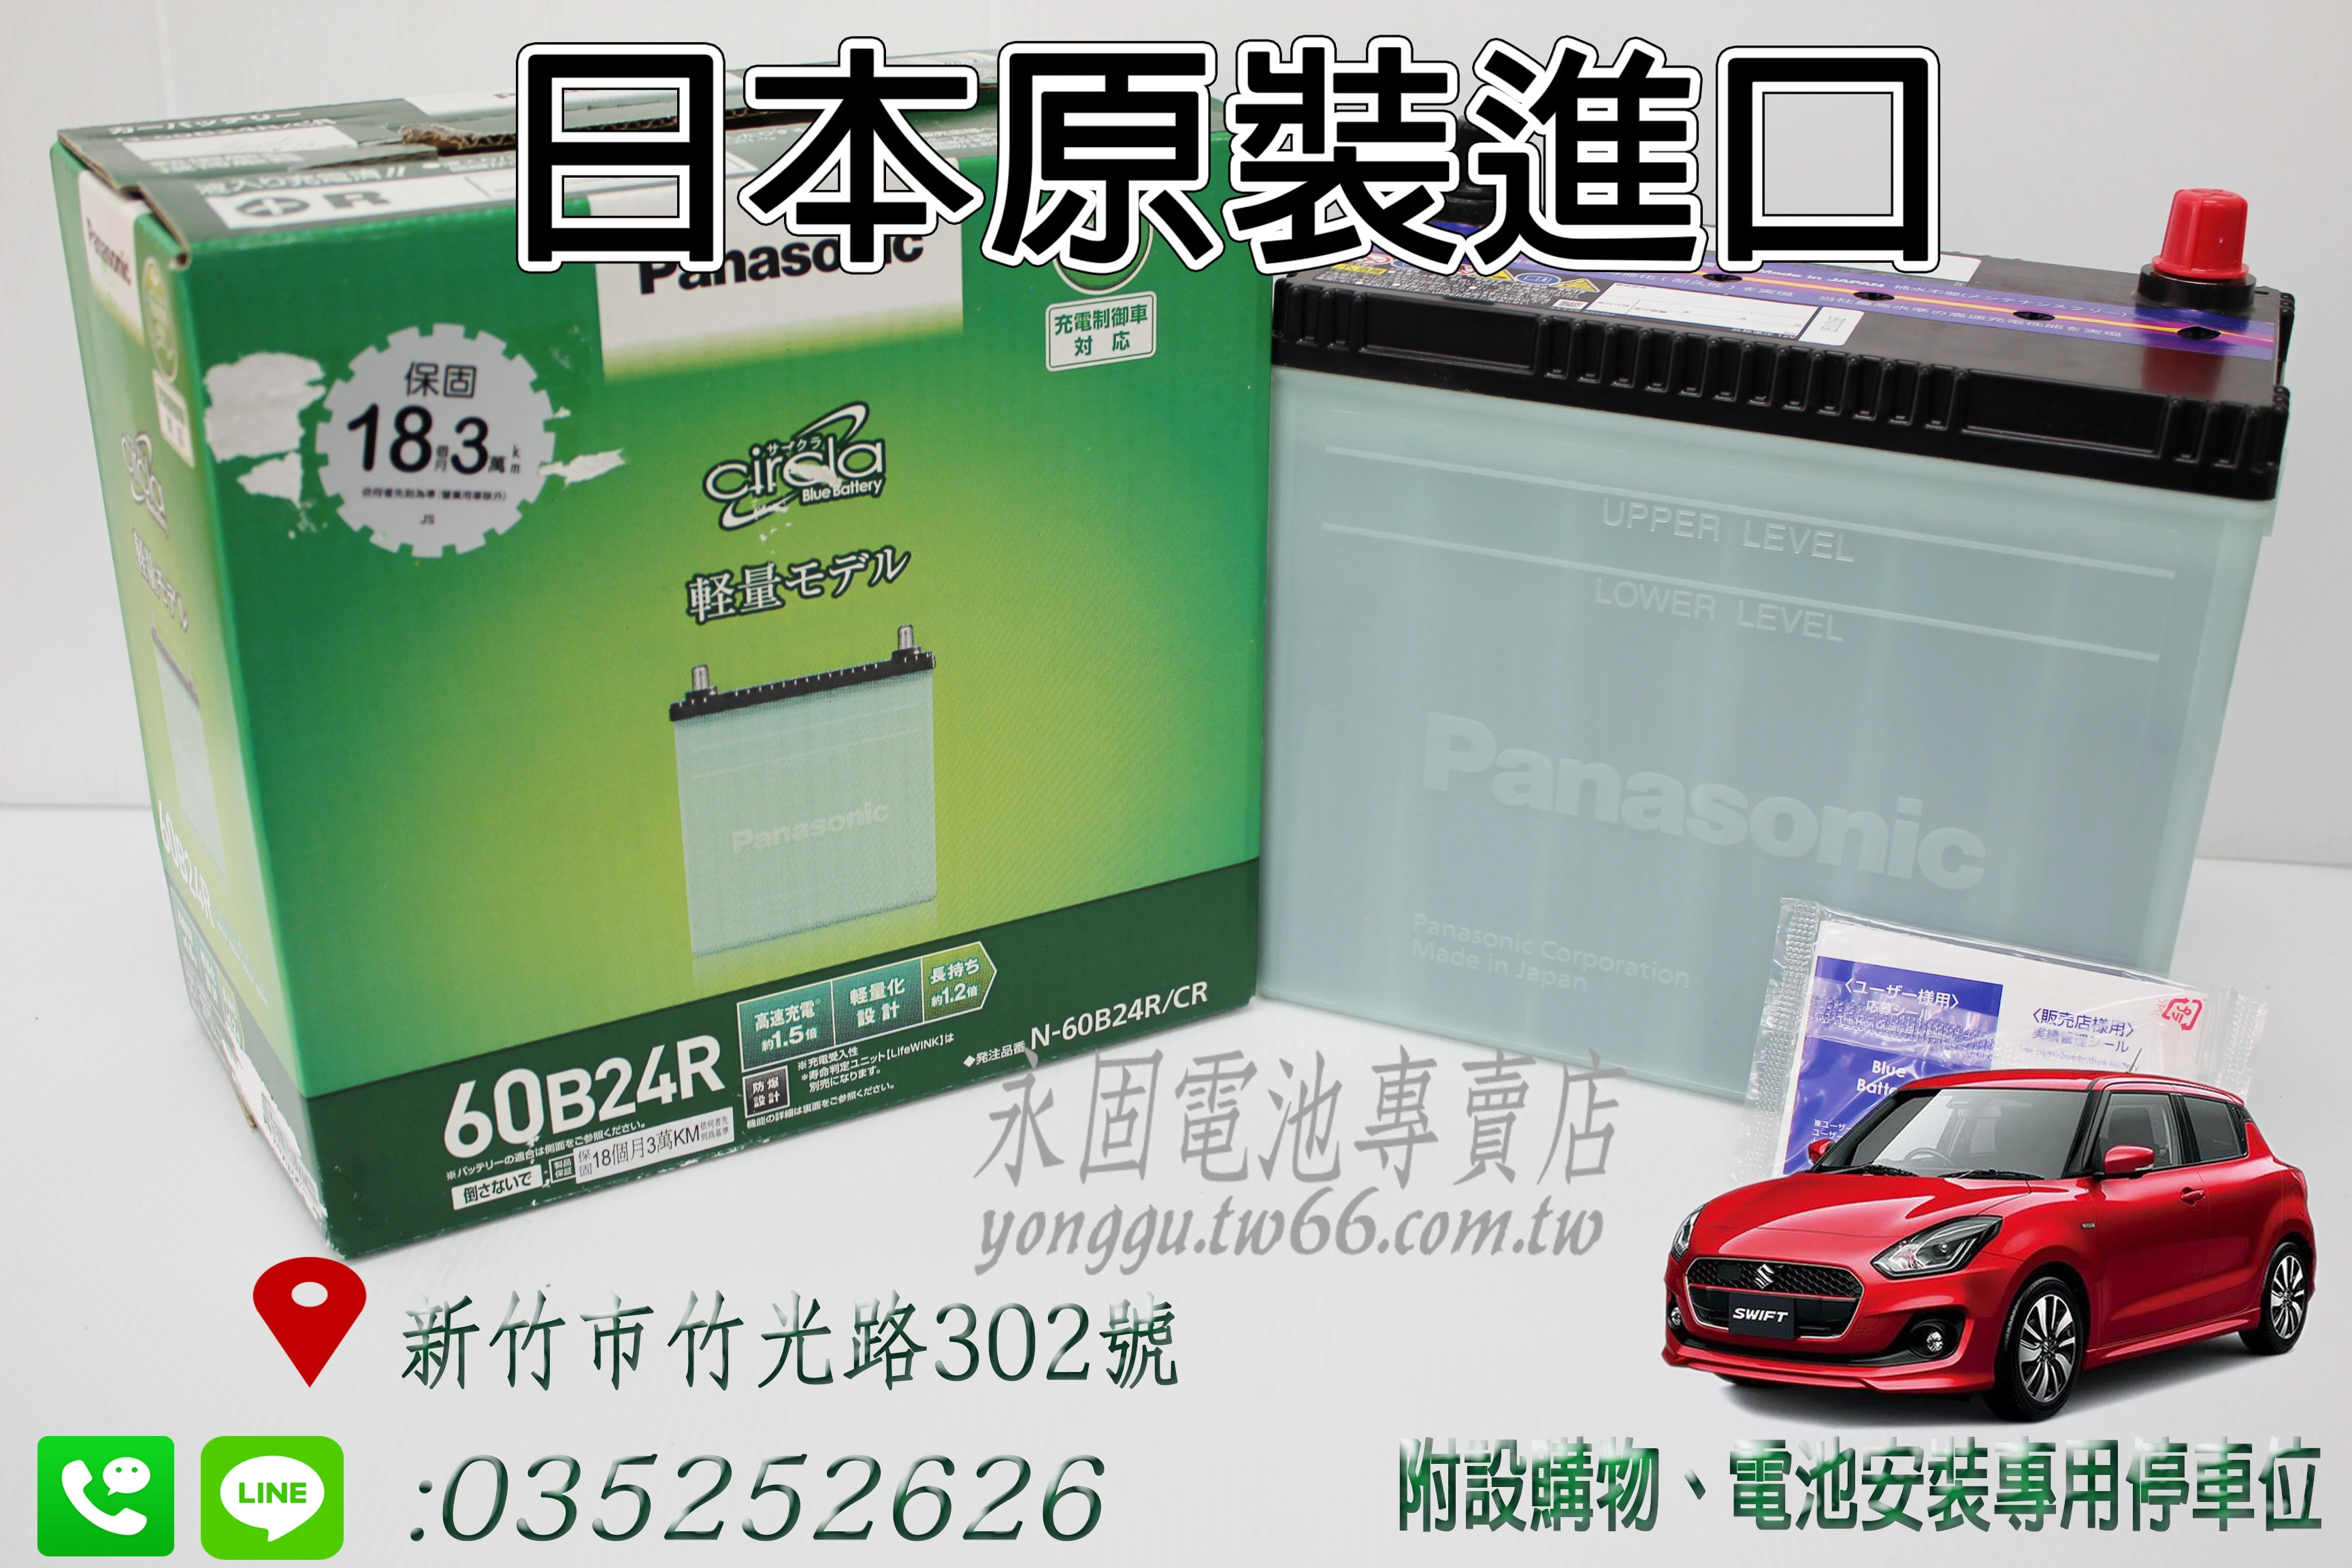 Panasonic 60B24R 銀合金 永固電池